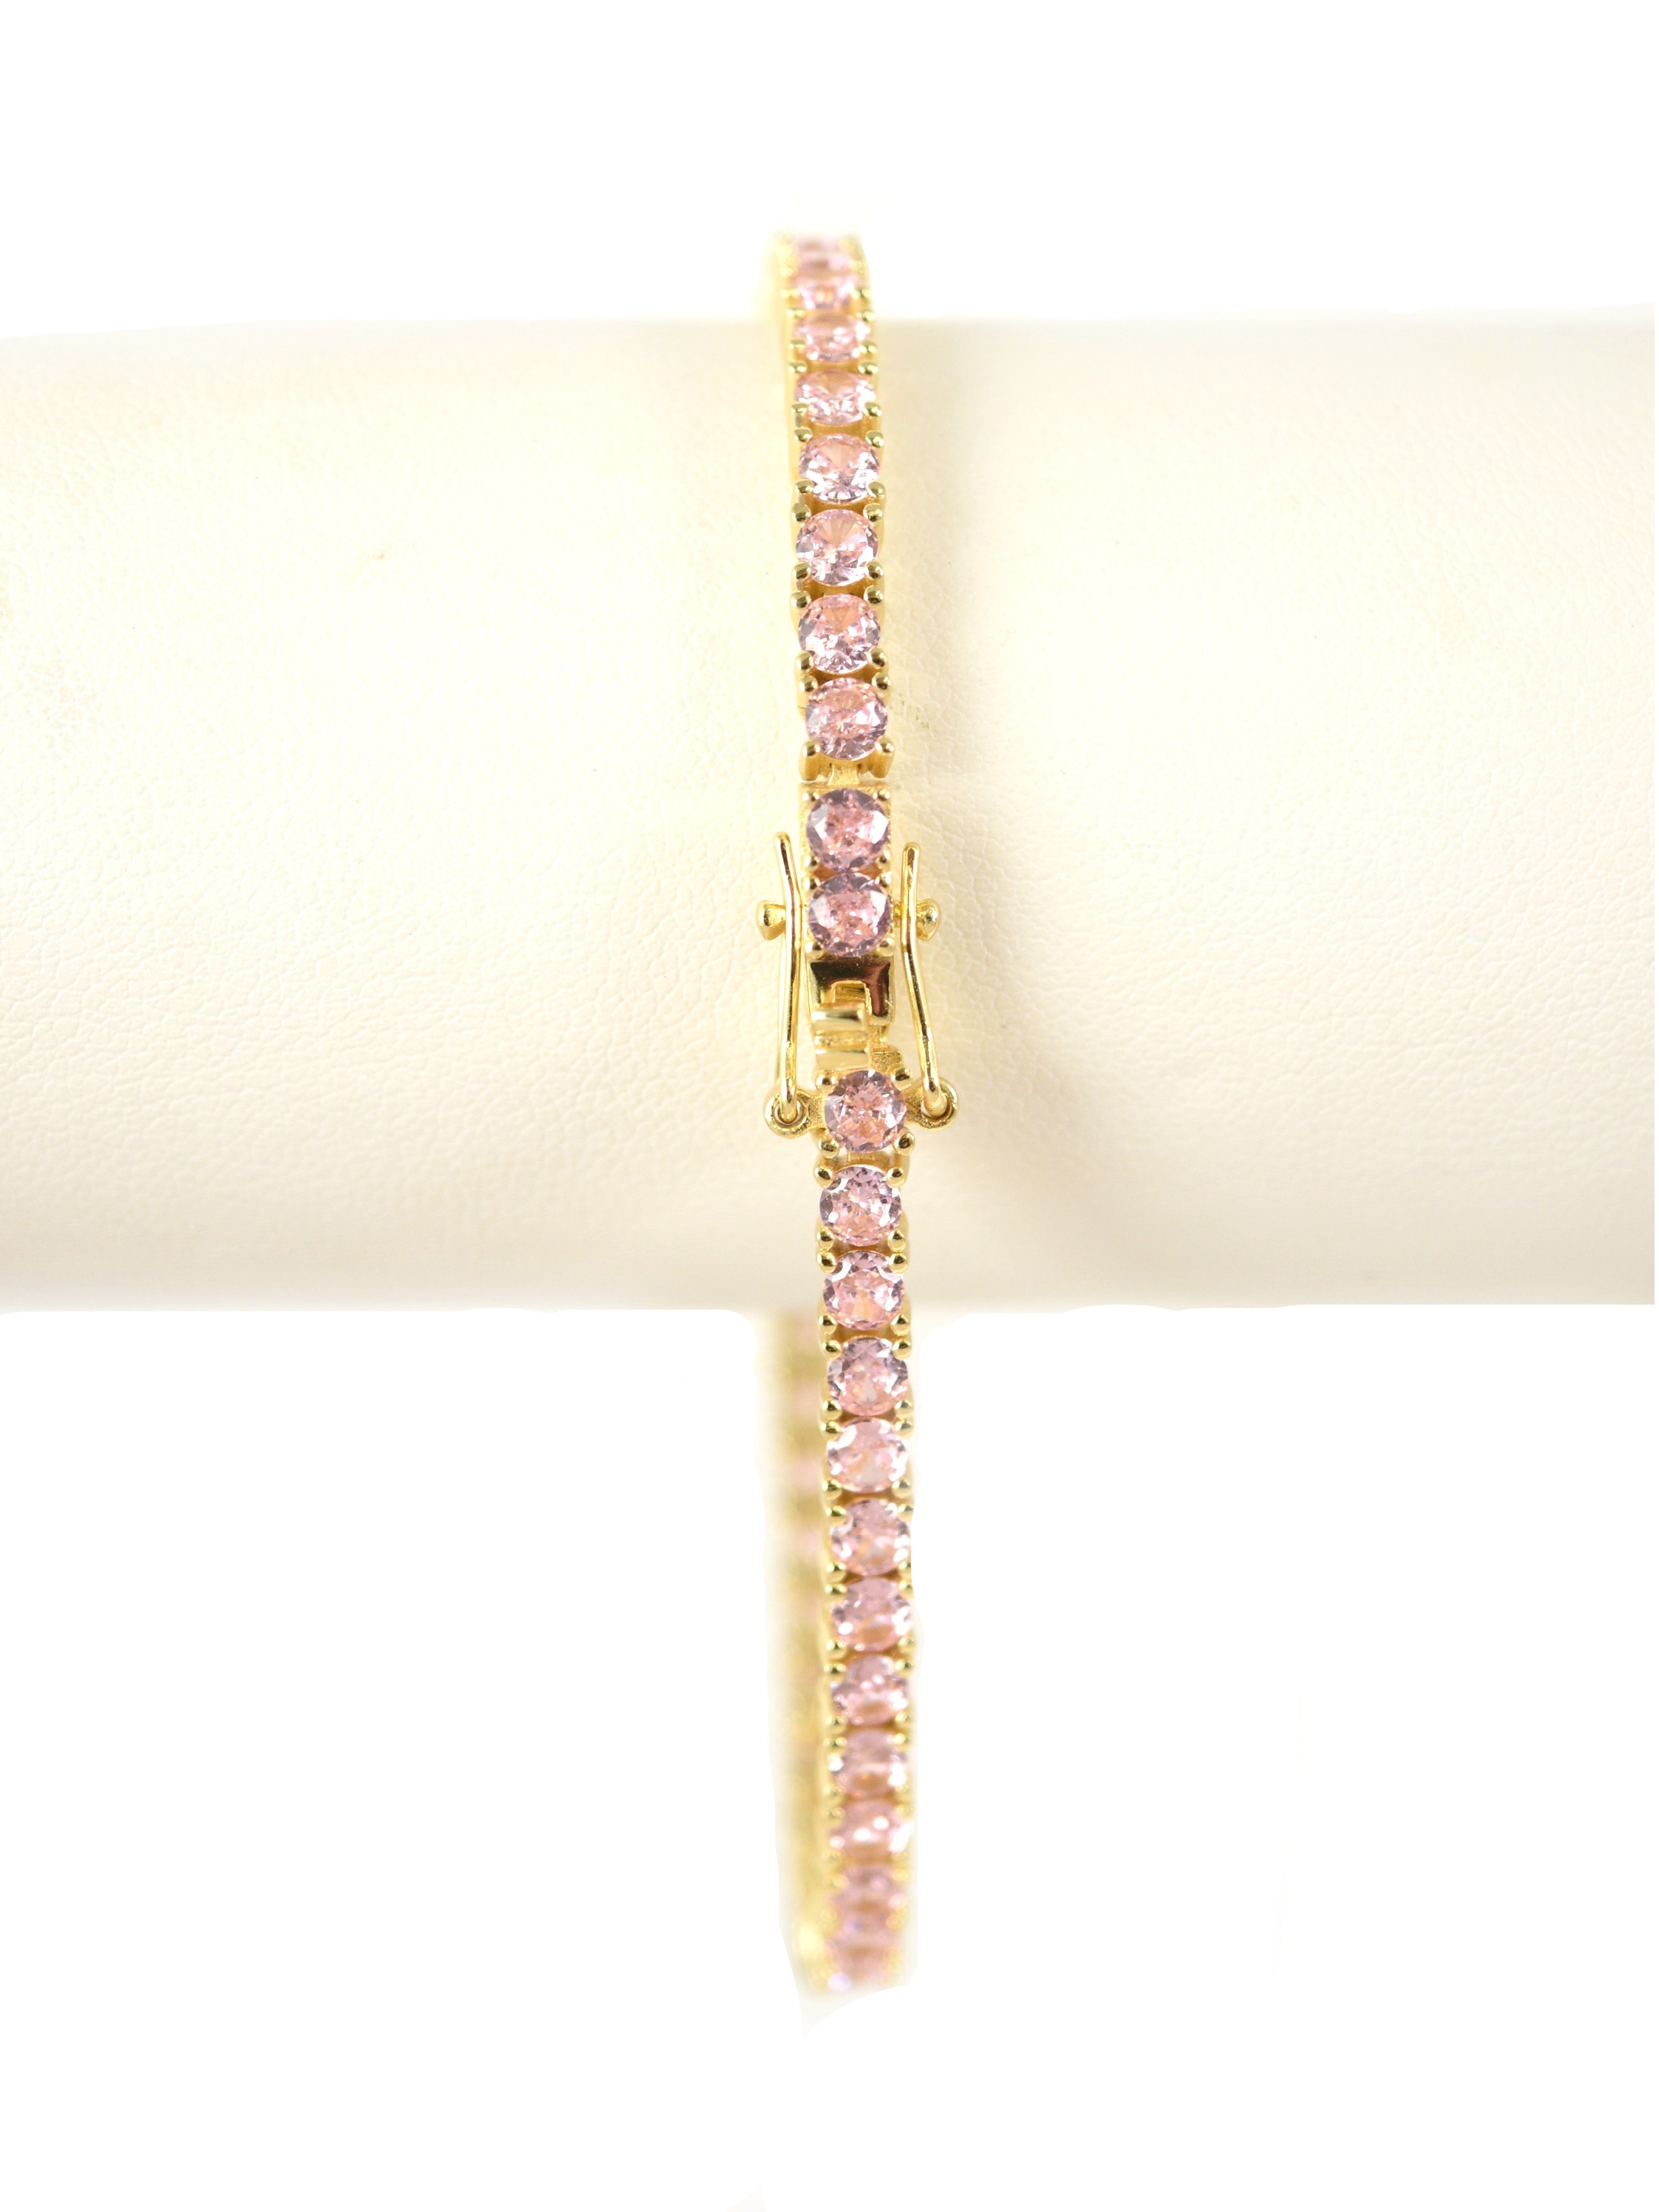 Starla Tennis Bracelet in Pink Crystals